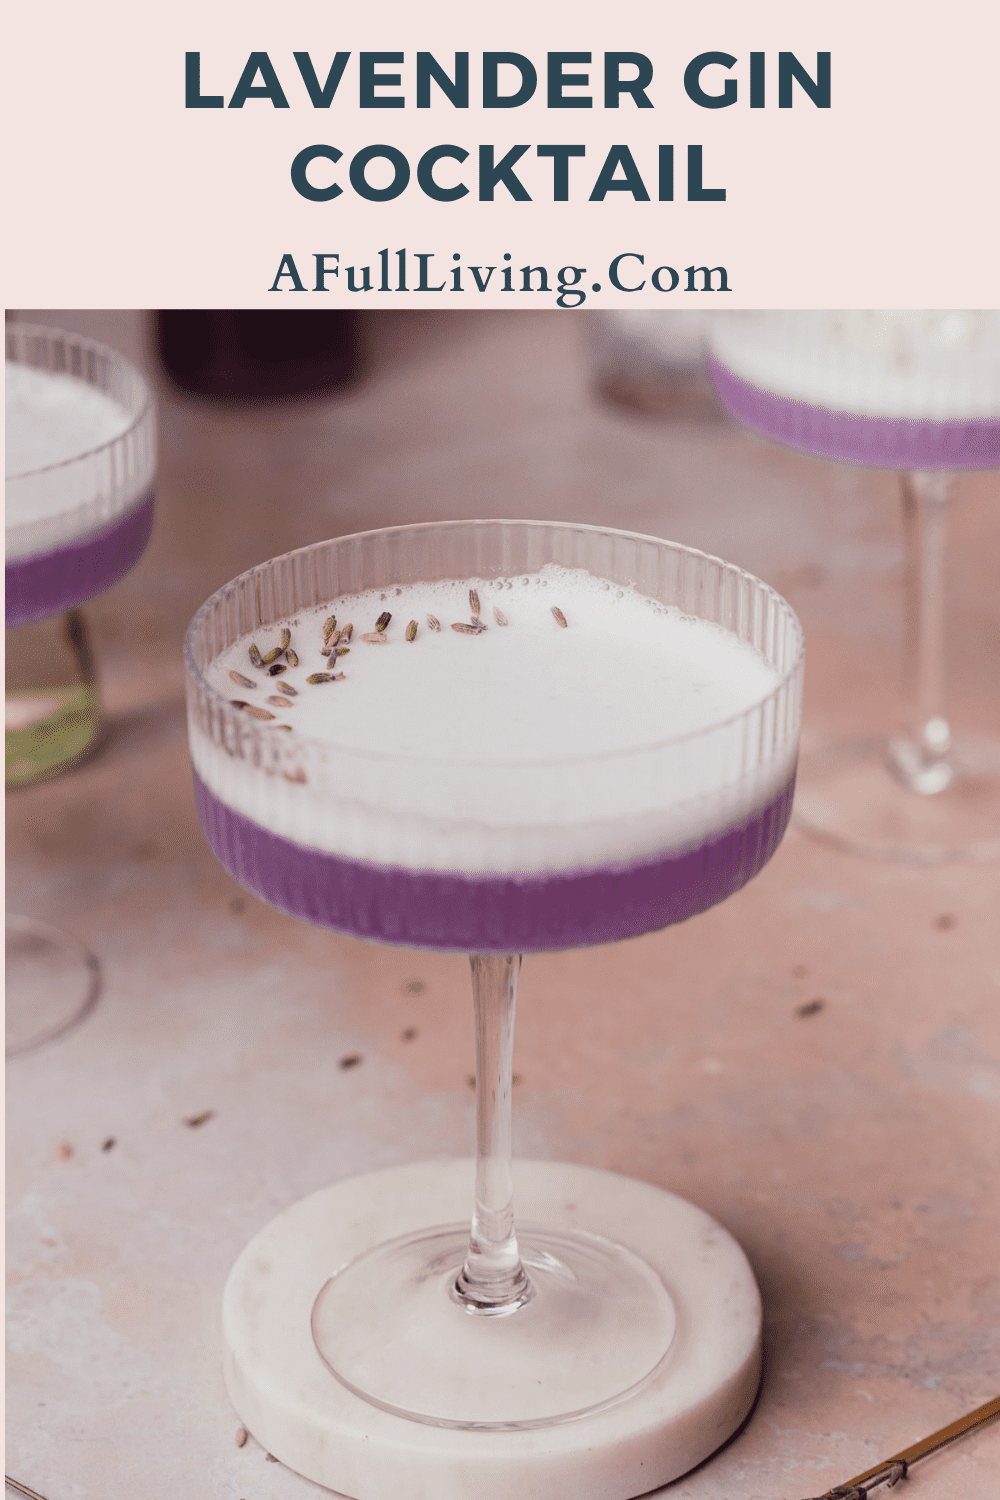 Lavender gin cocktail